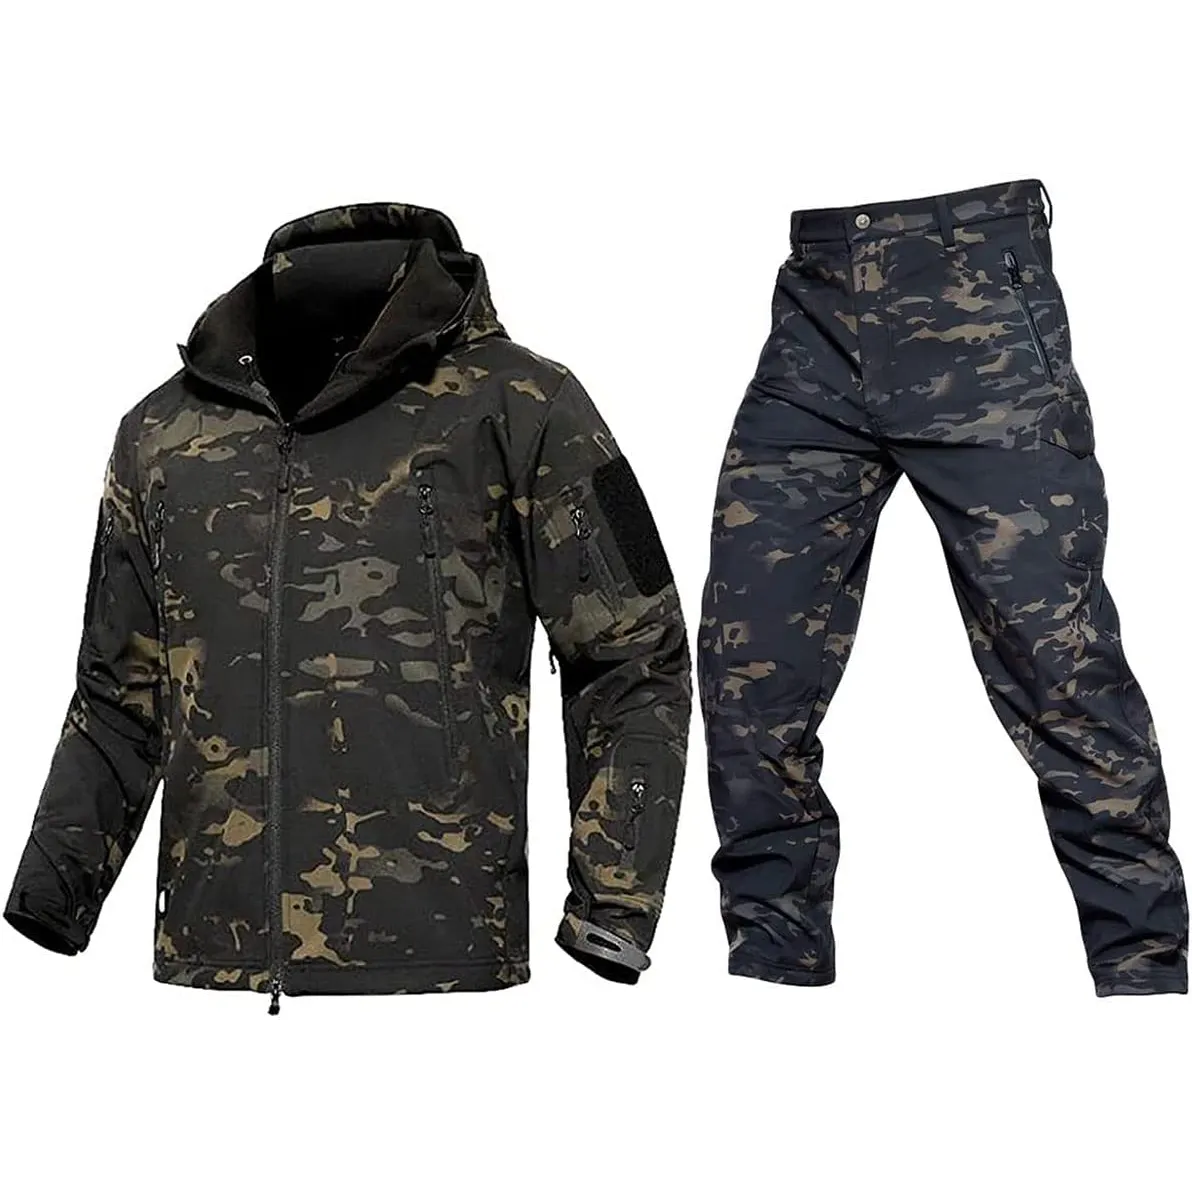 Men's Tactical Jacket and Trousers Costume Hunting Uniform Camo 2 Pieces Multicamo Tactical Uniform